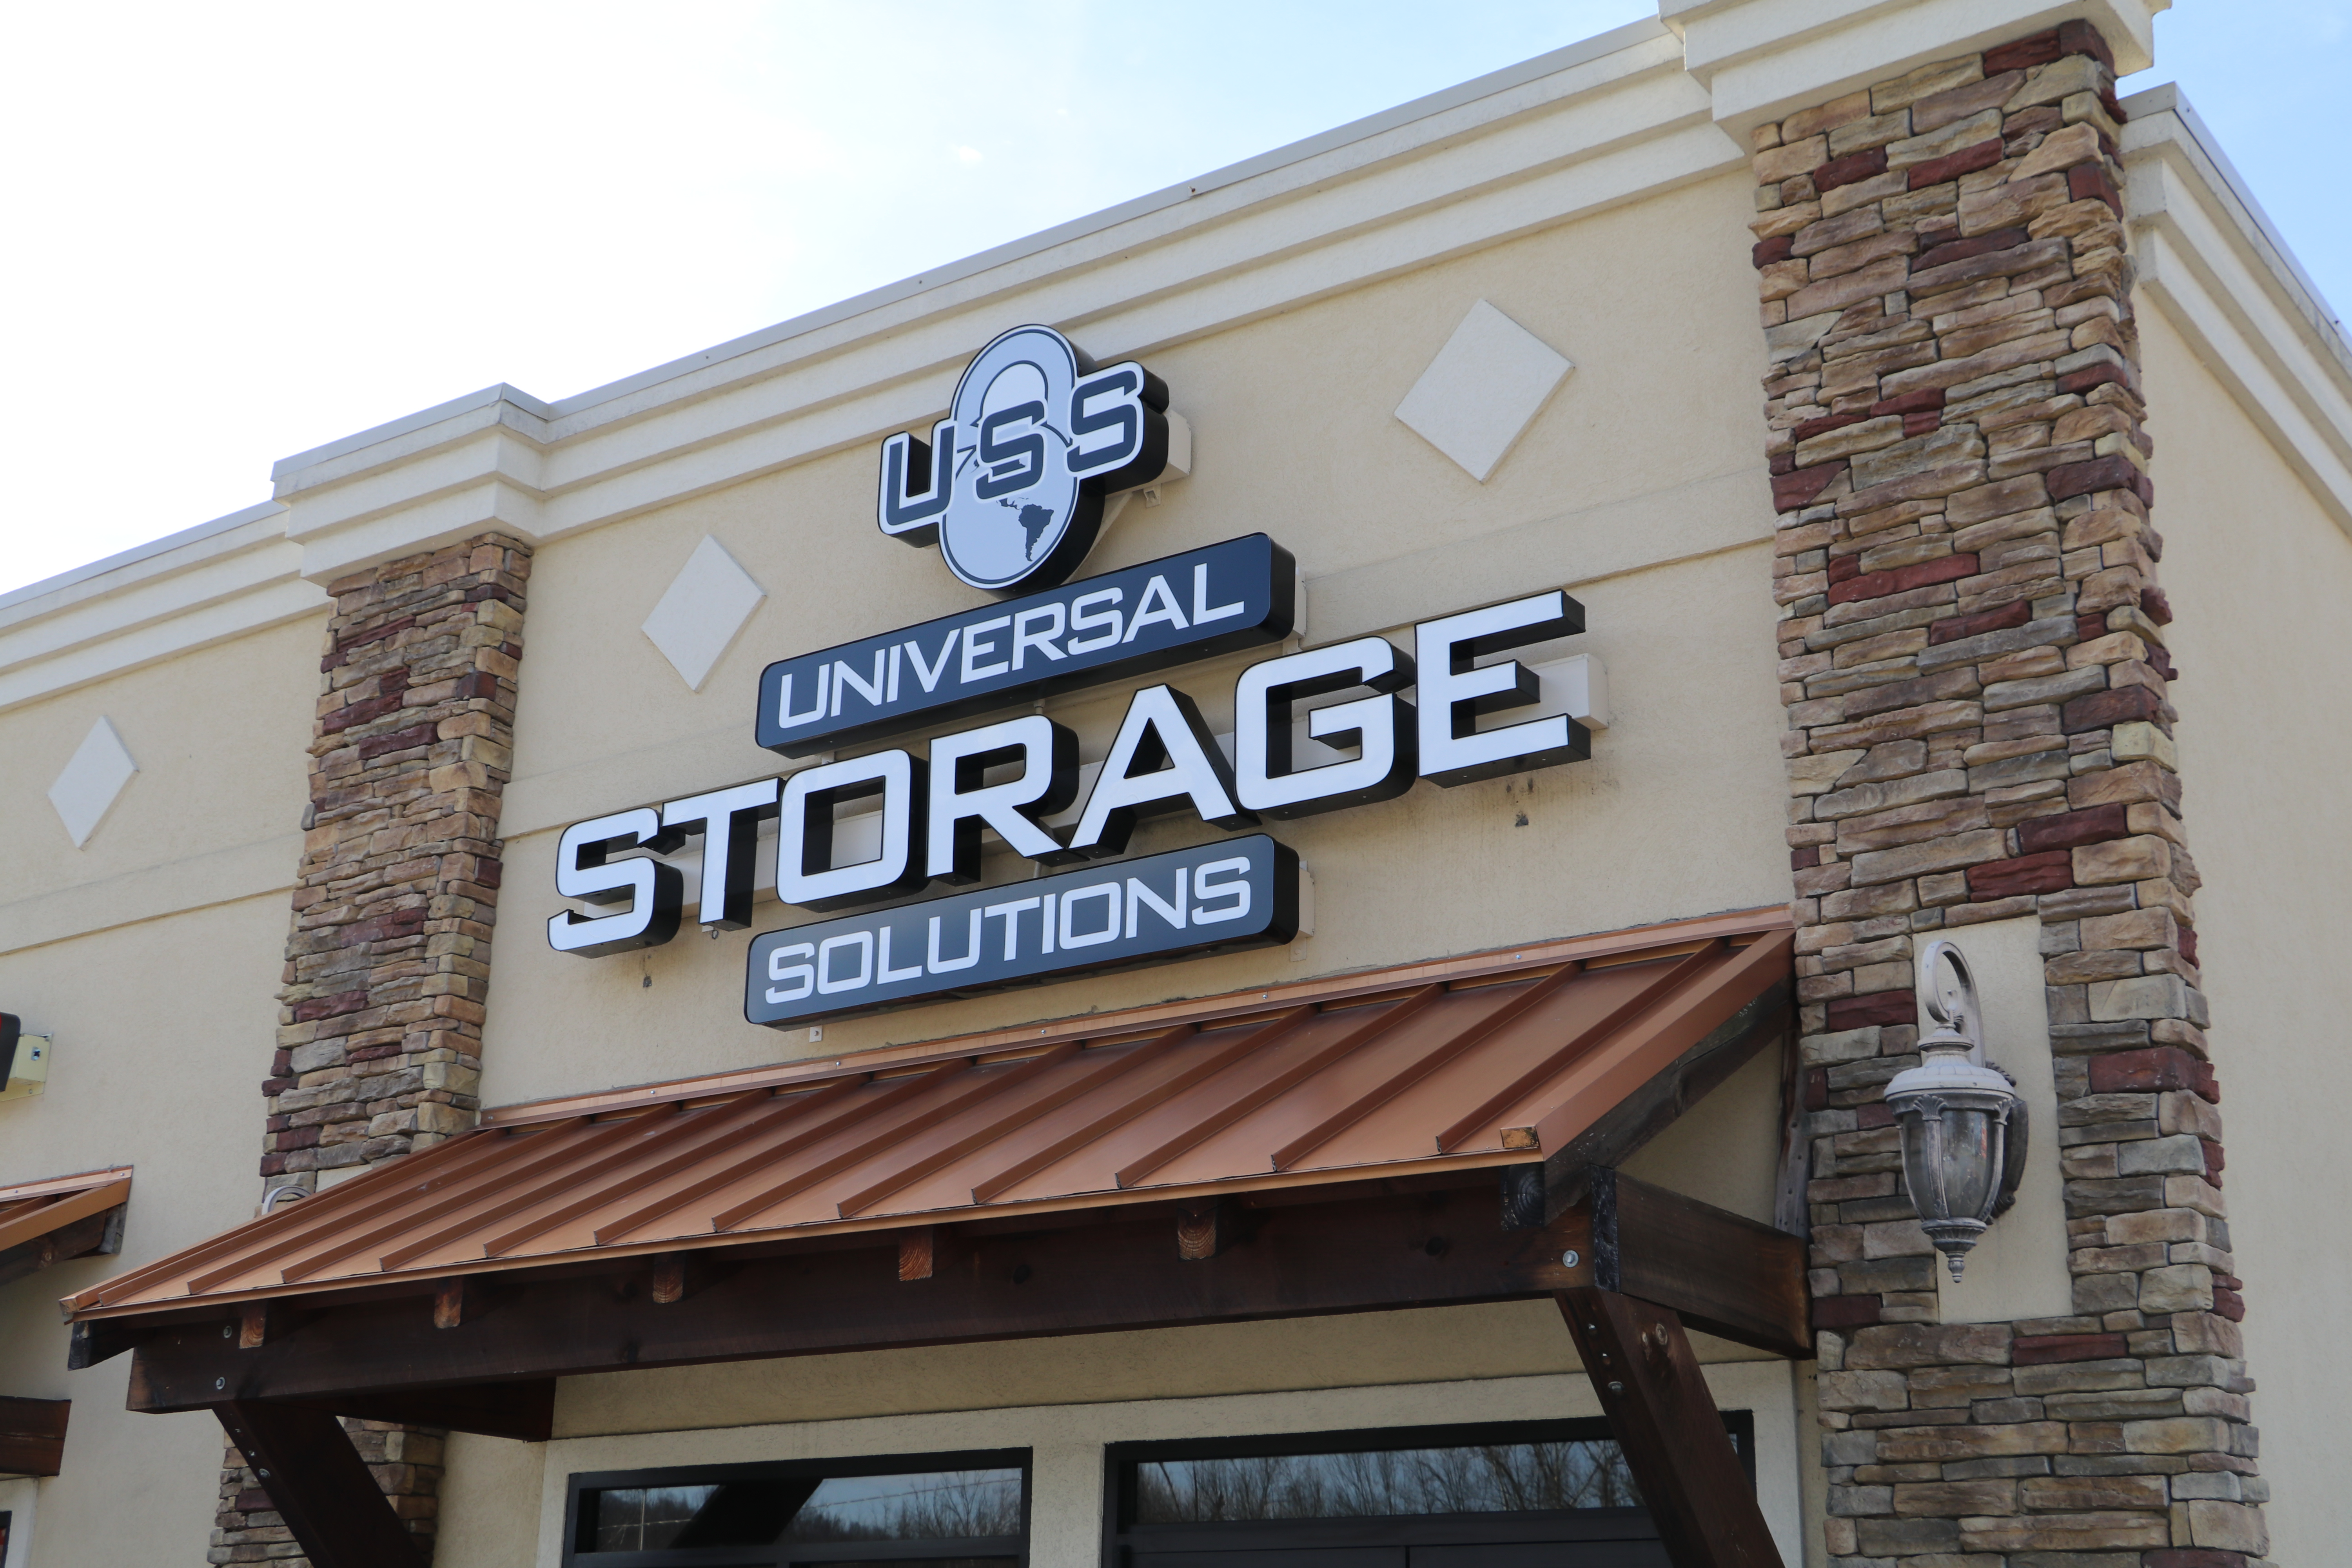 Universal Storage Solutions Elizabethton Office